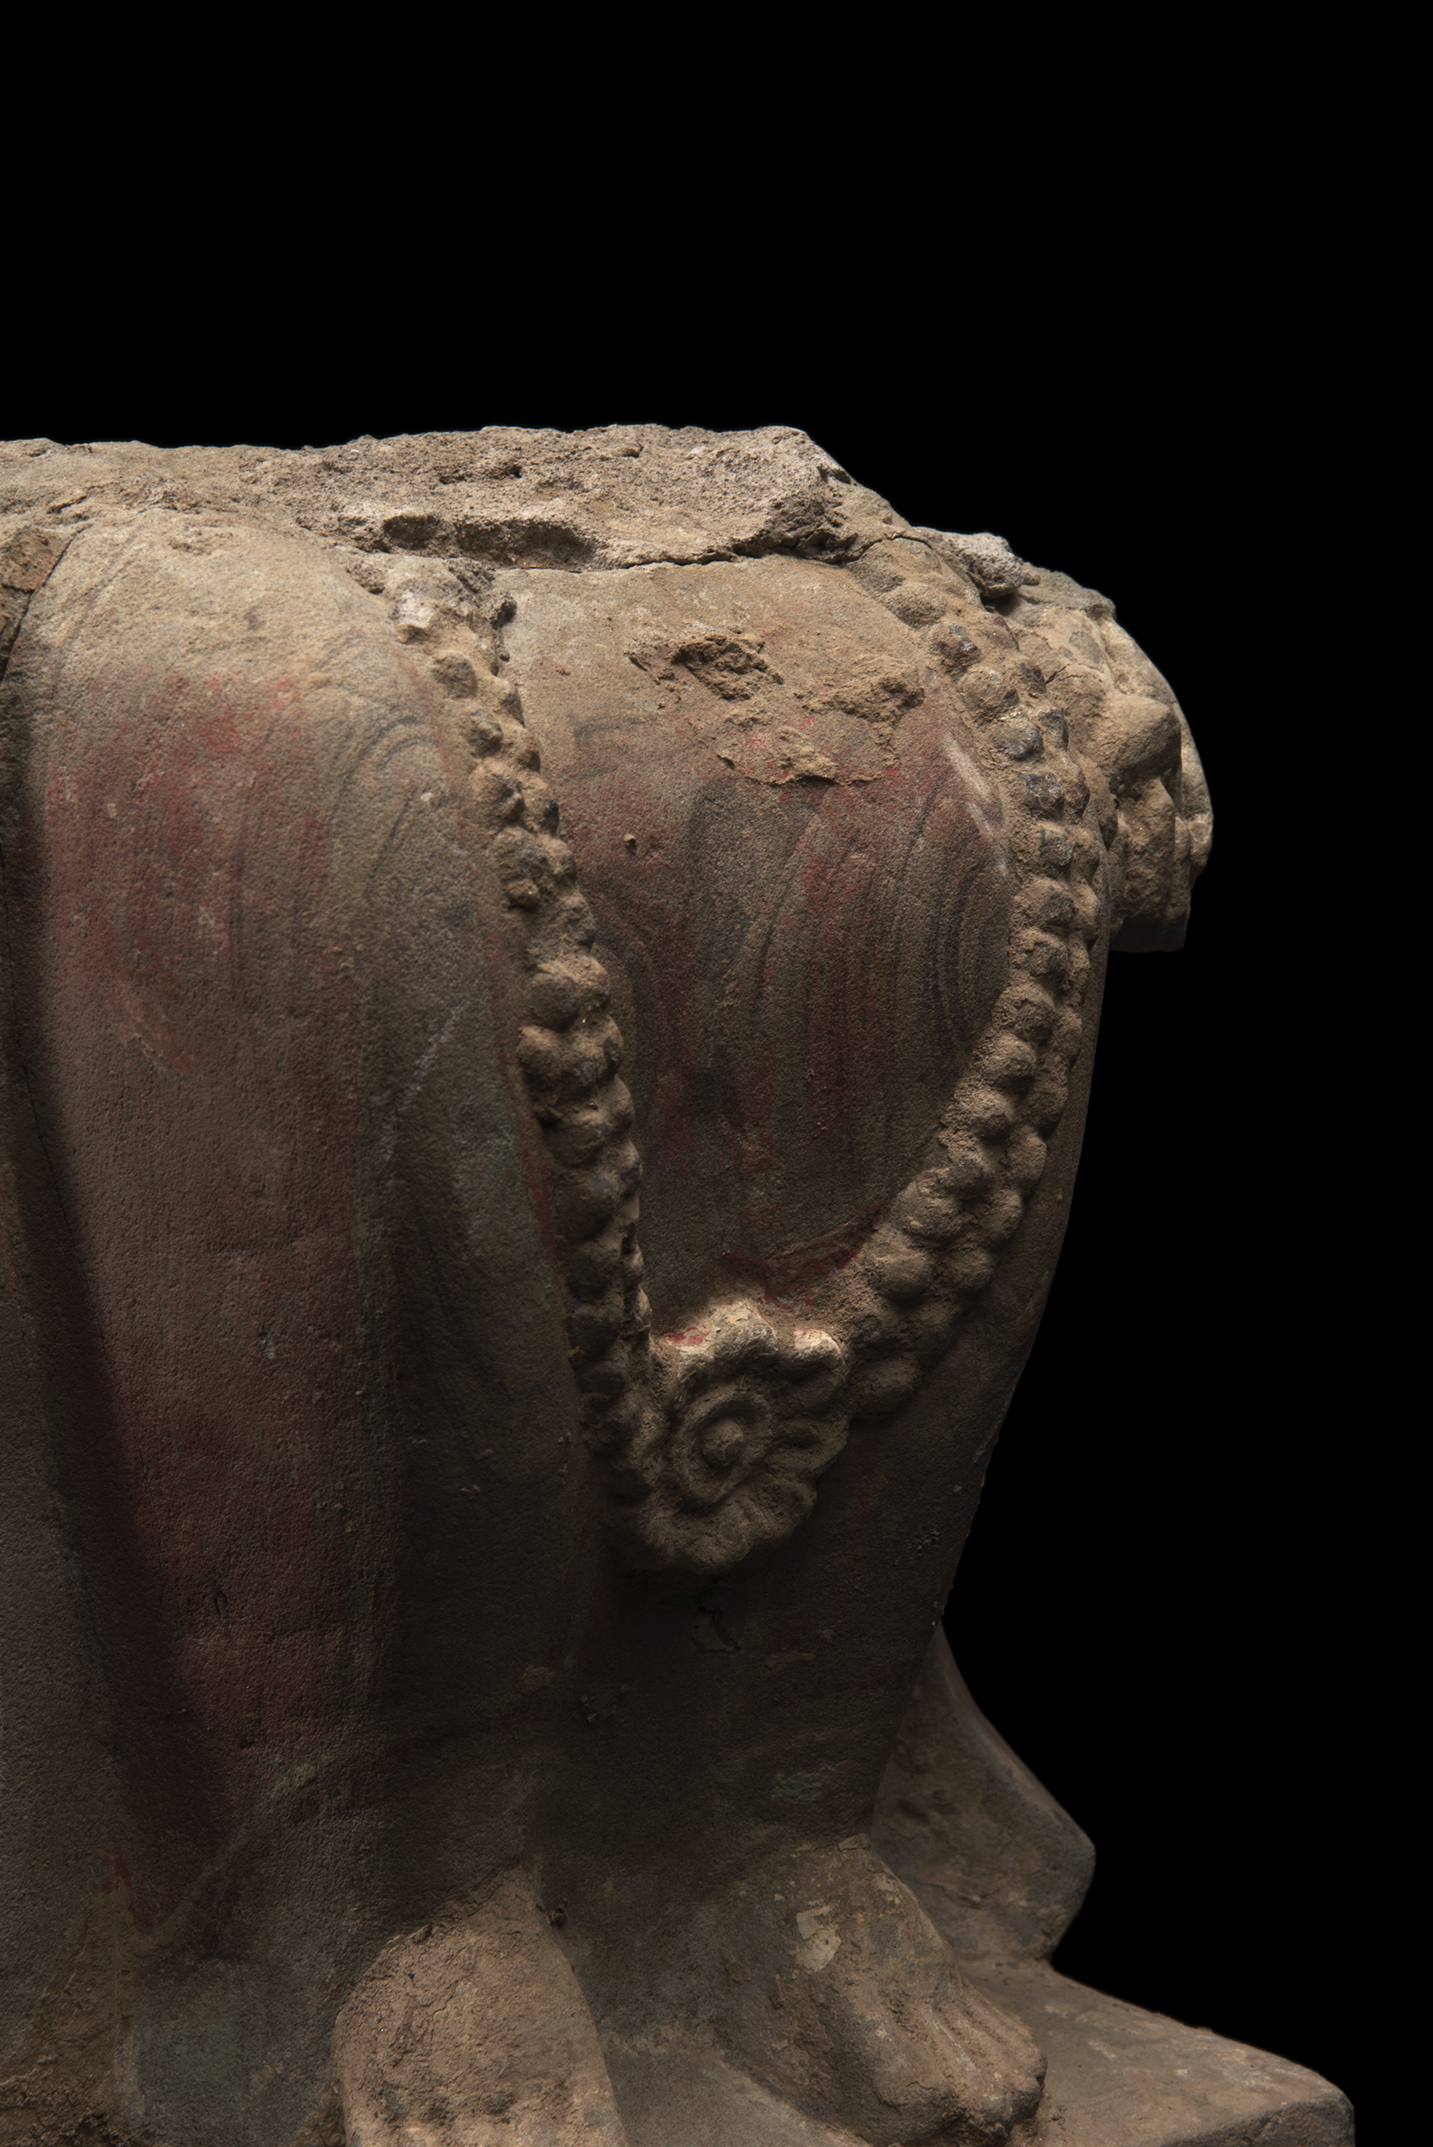 Fragmentary Figure of a Seated Bodhisattva